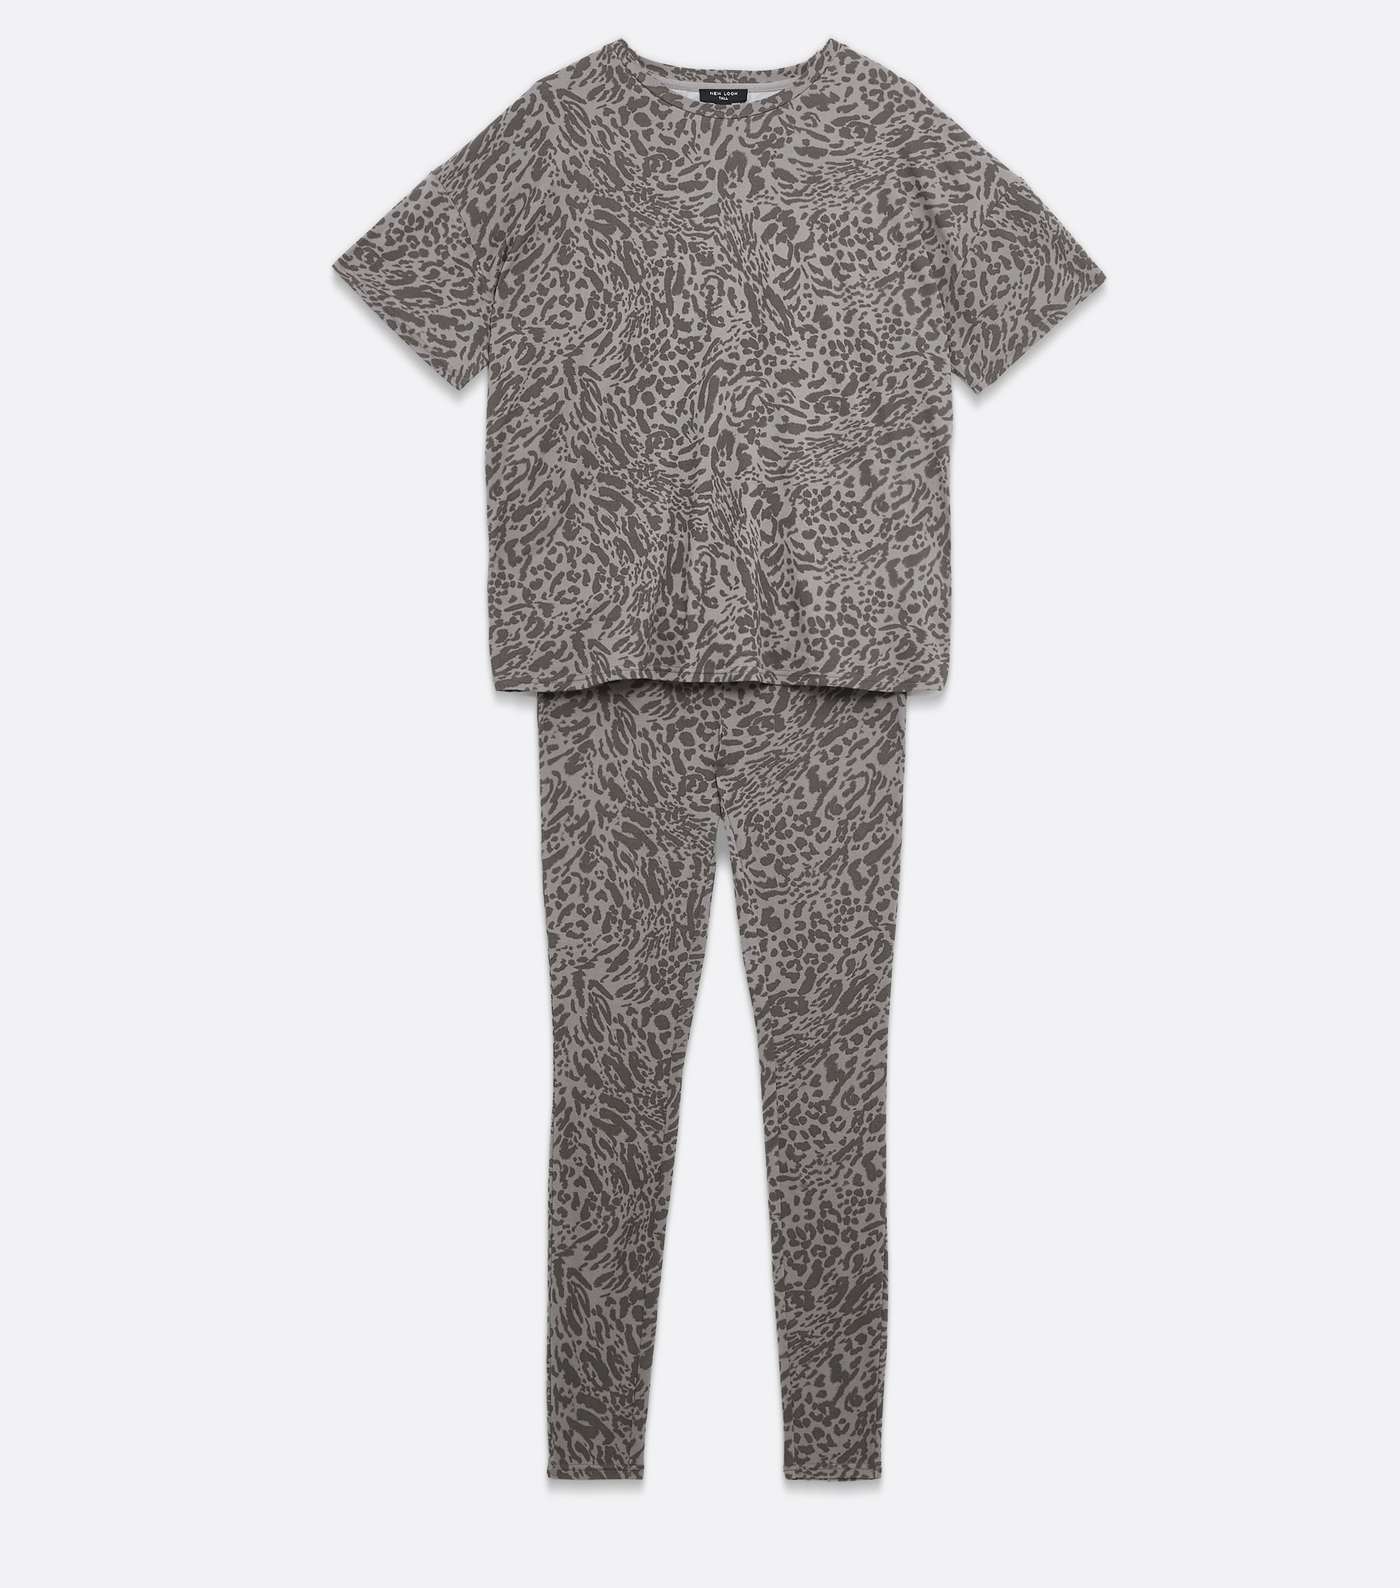 Tall Grey Soft Touch Legging Pyjama Set with Animal Print Image 5